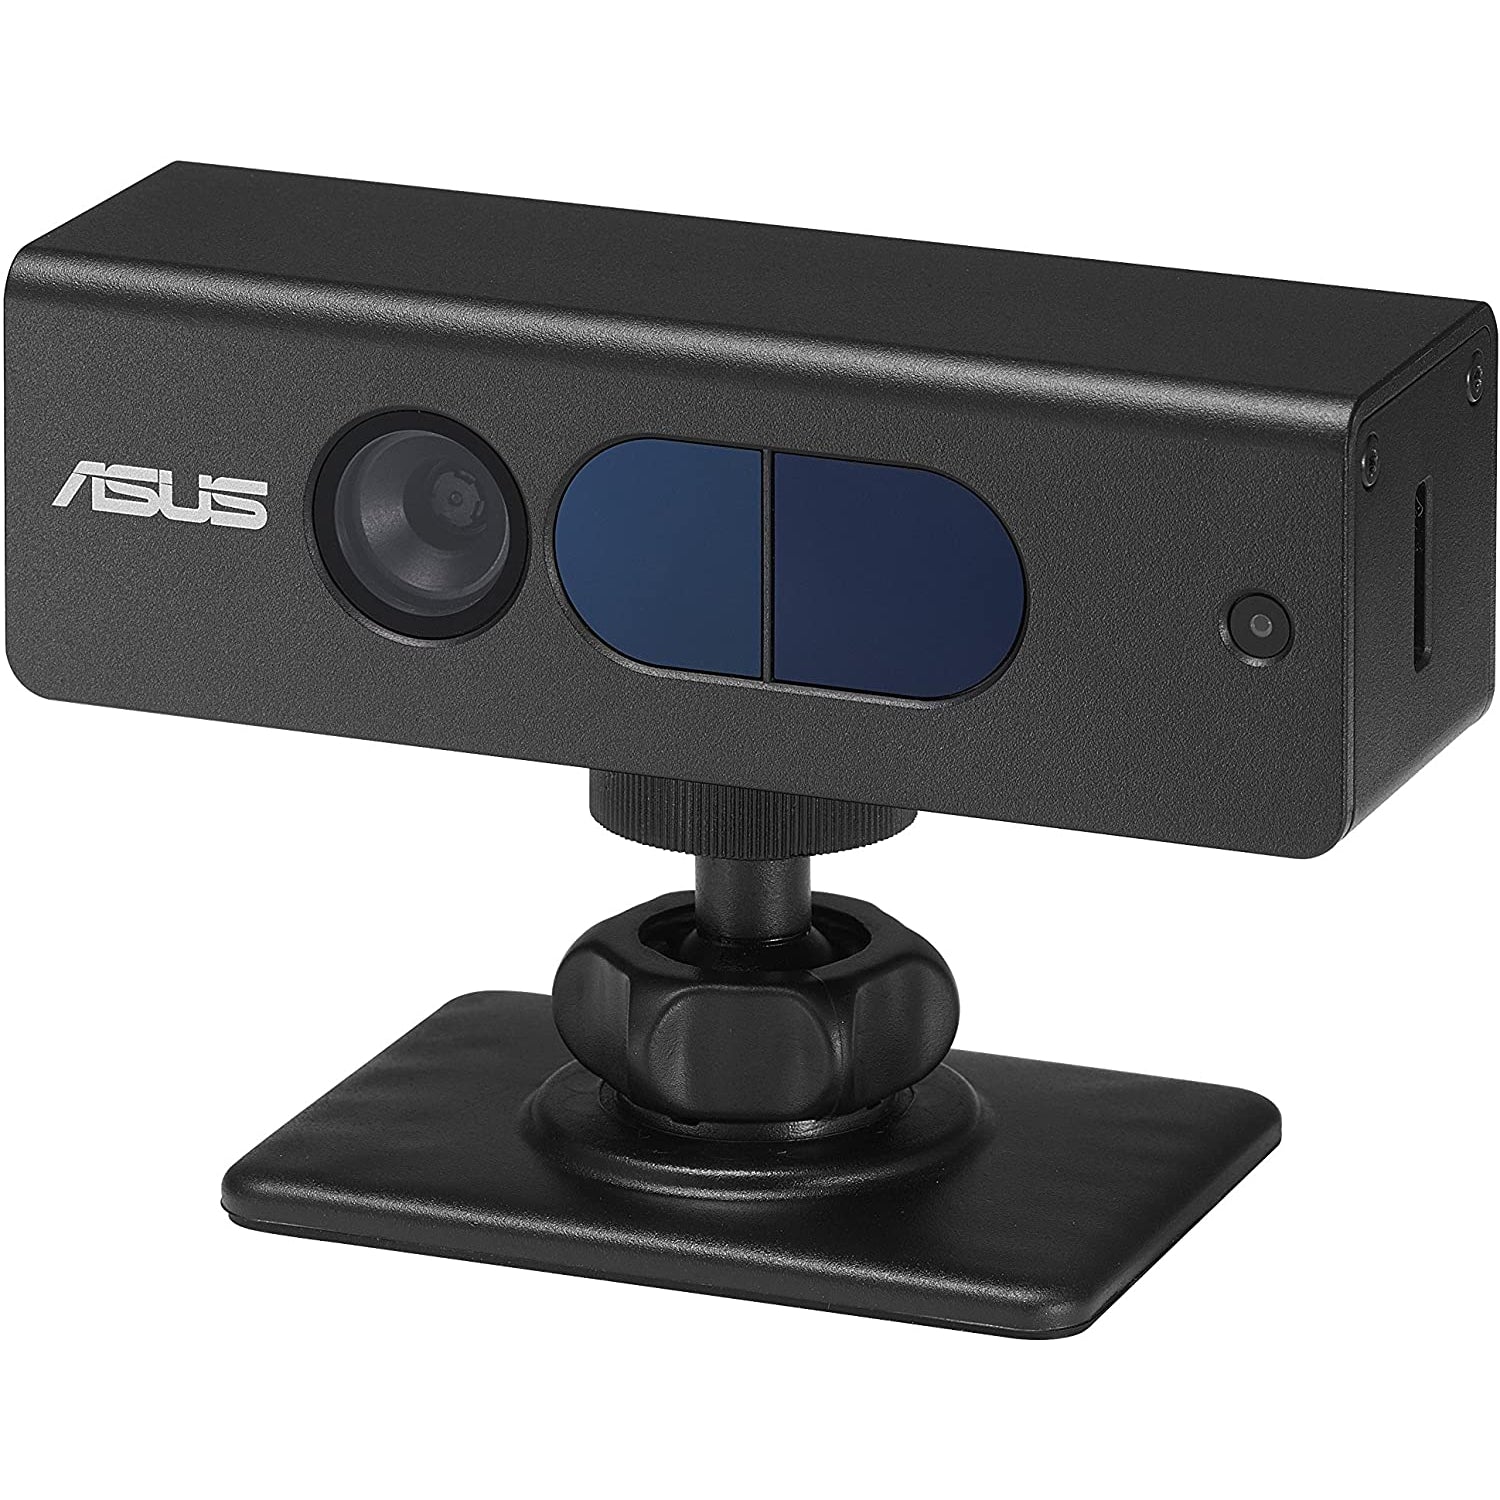 Asus Xtion2 3D RGB and Depth Sensor